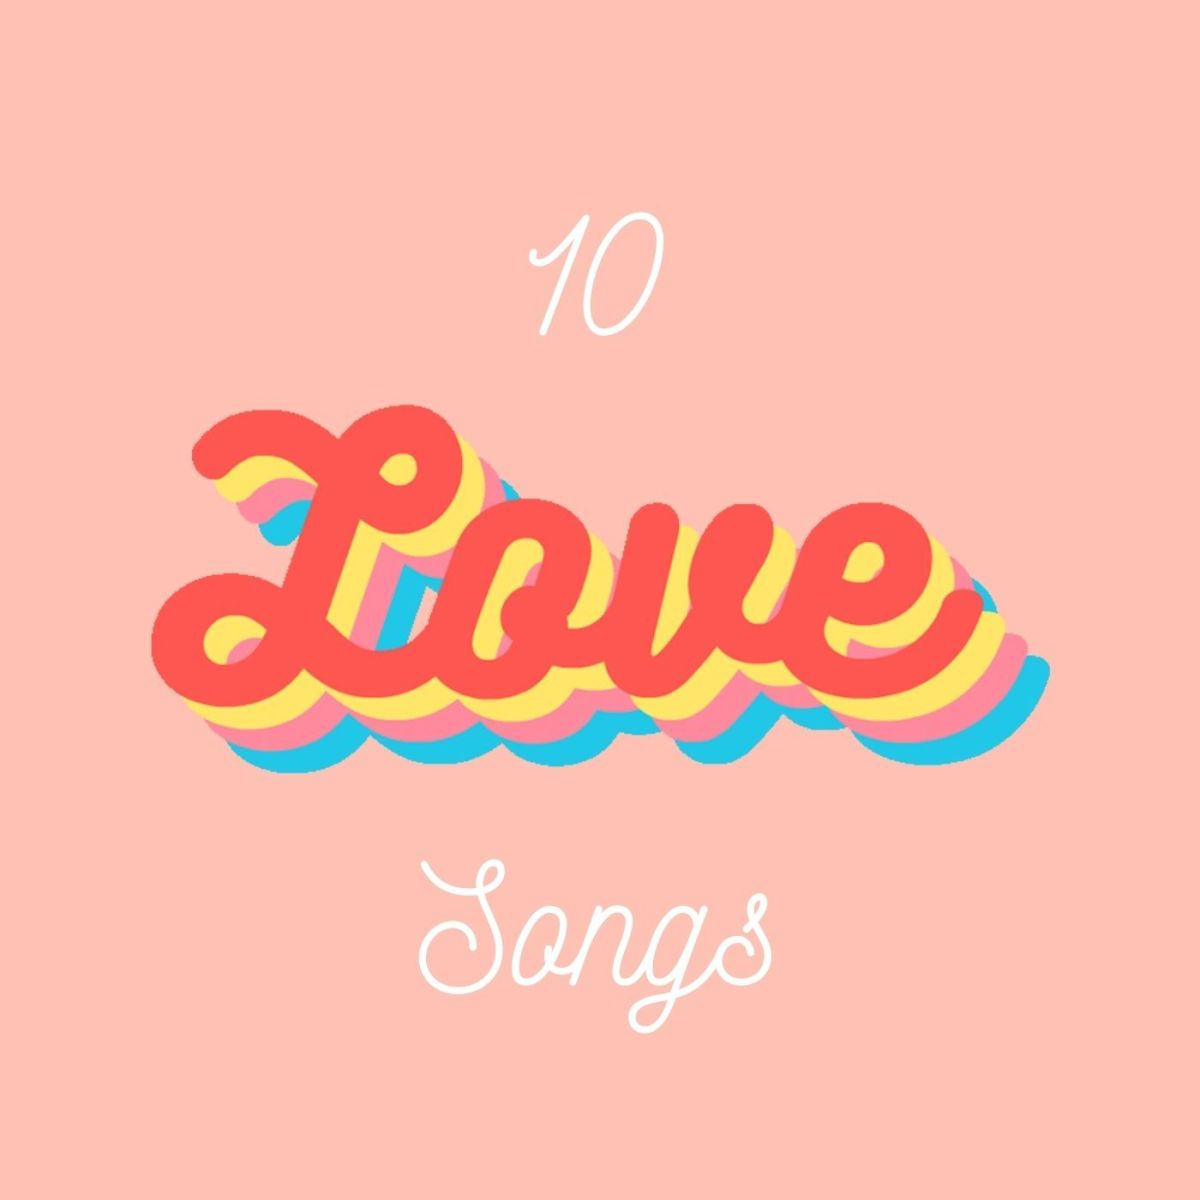 Top 10 Love Songs for Romantics